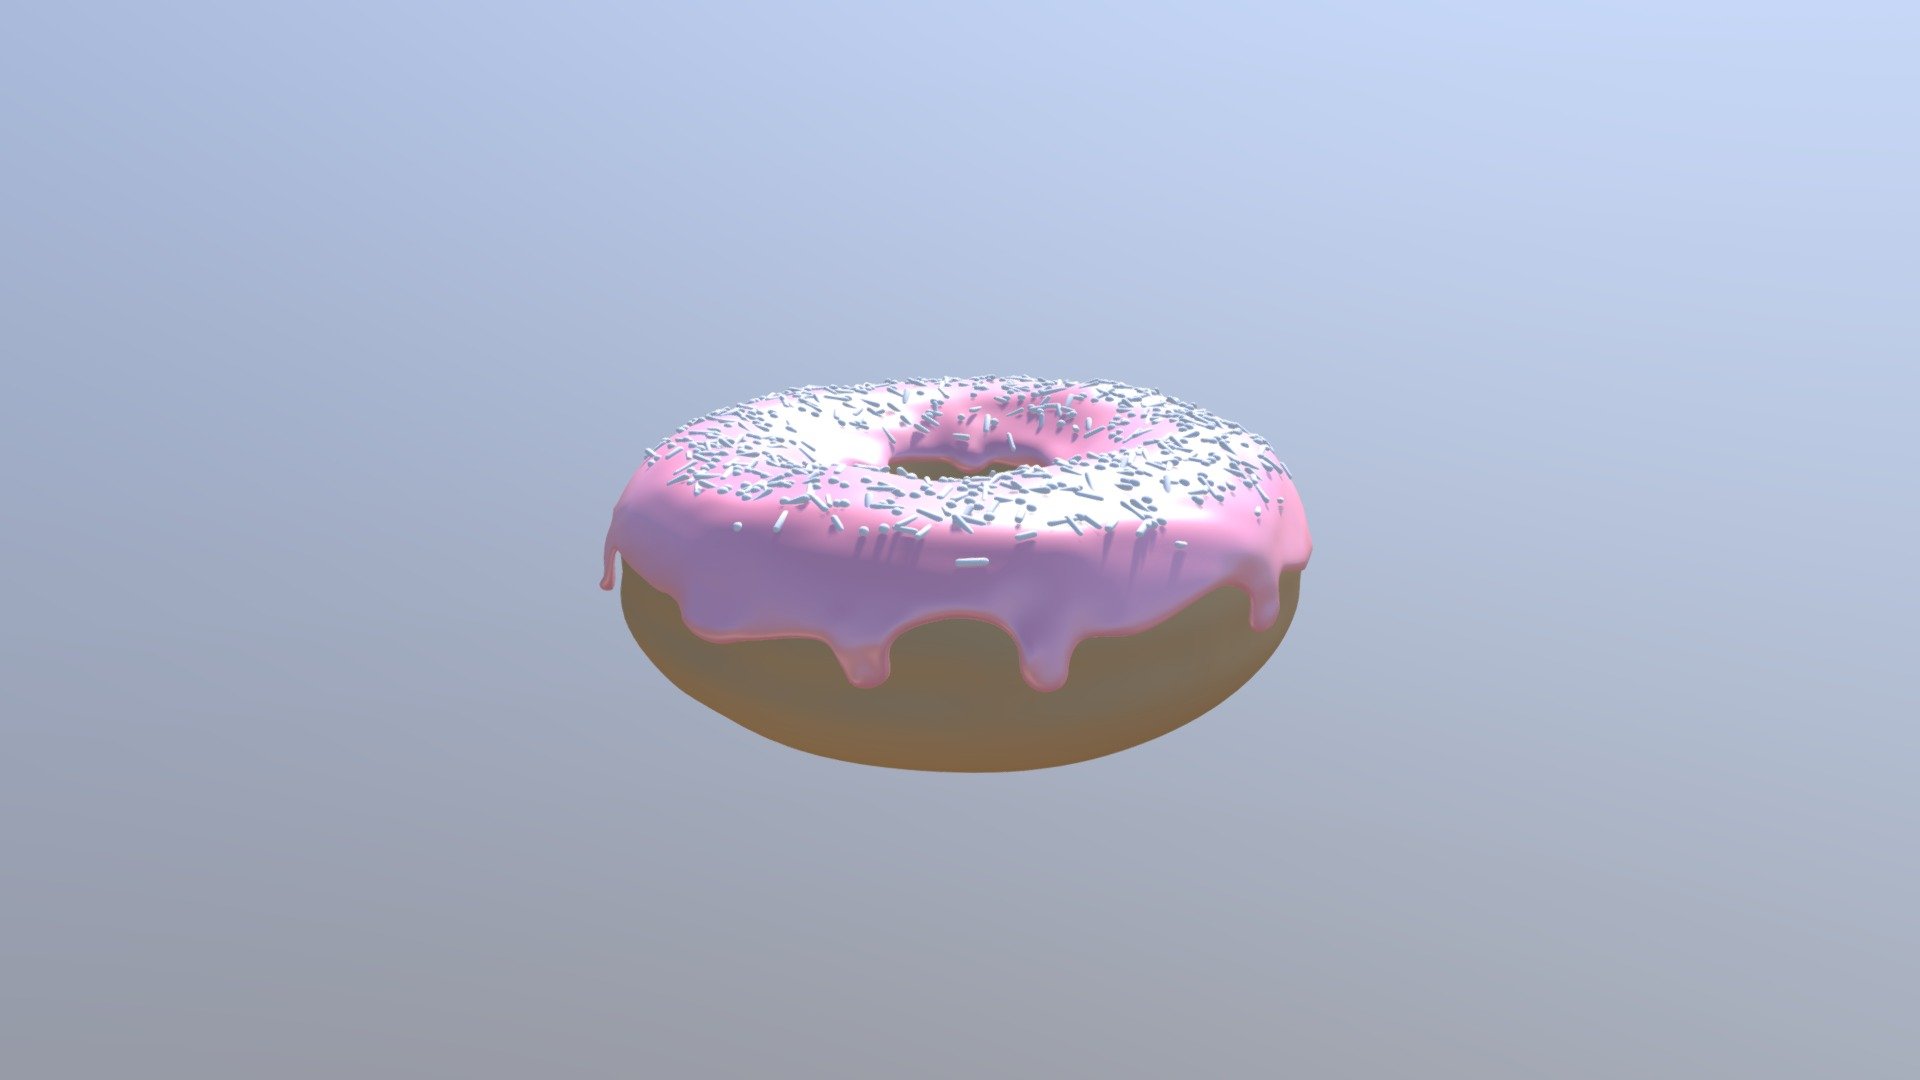 blender donut model icing cuts problem